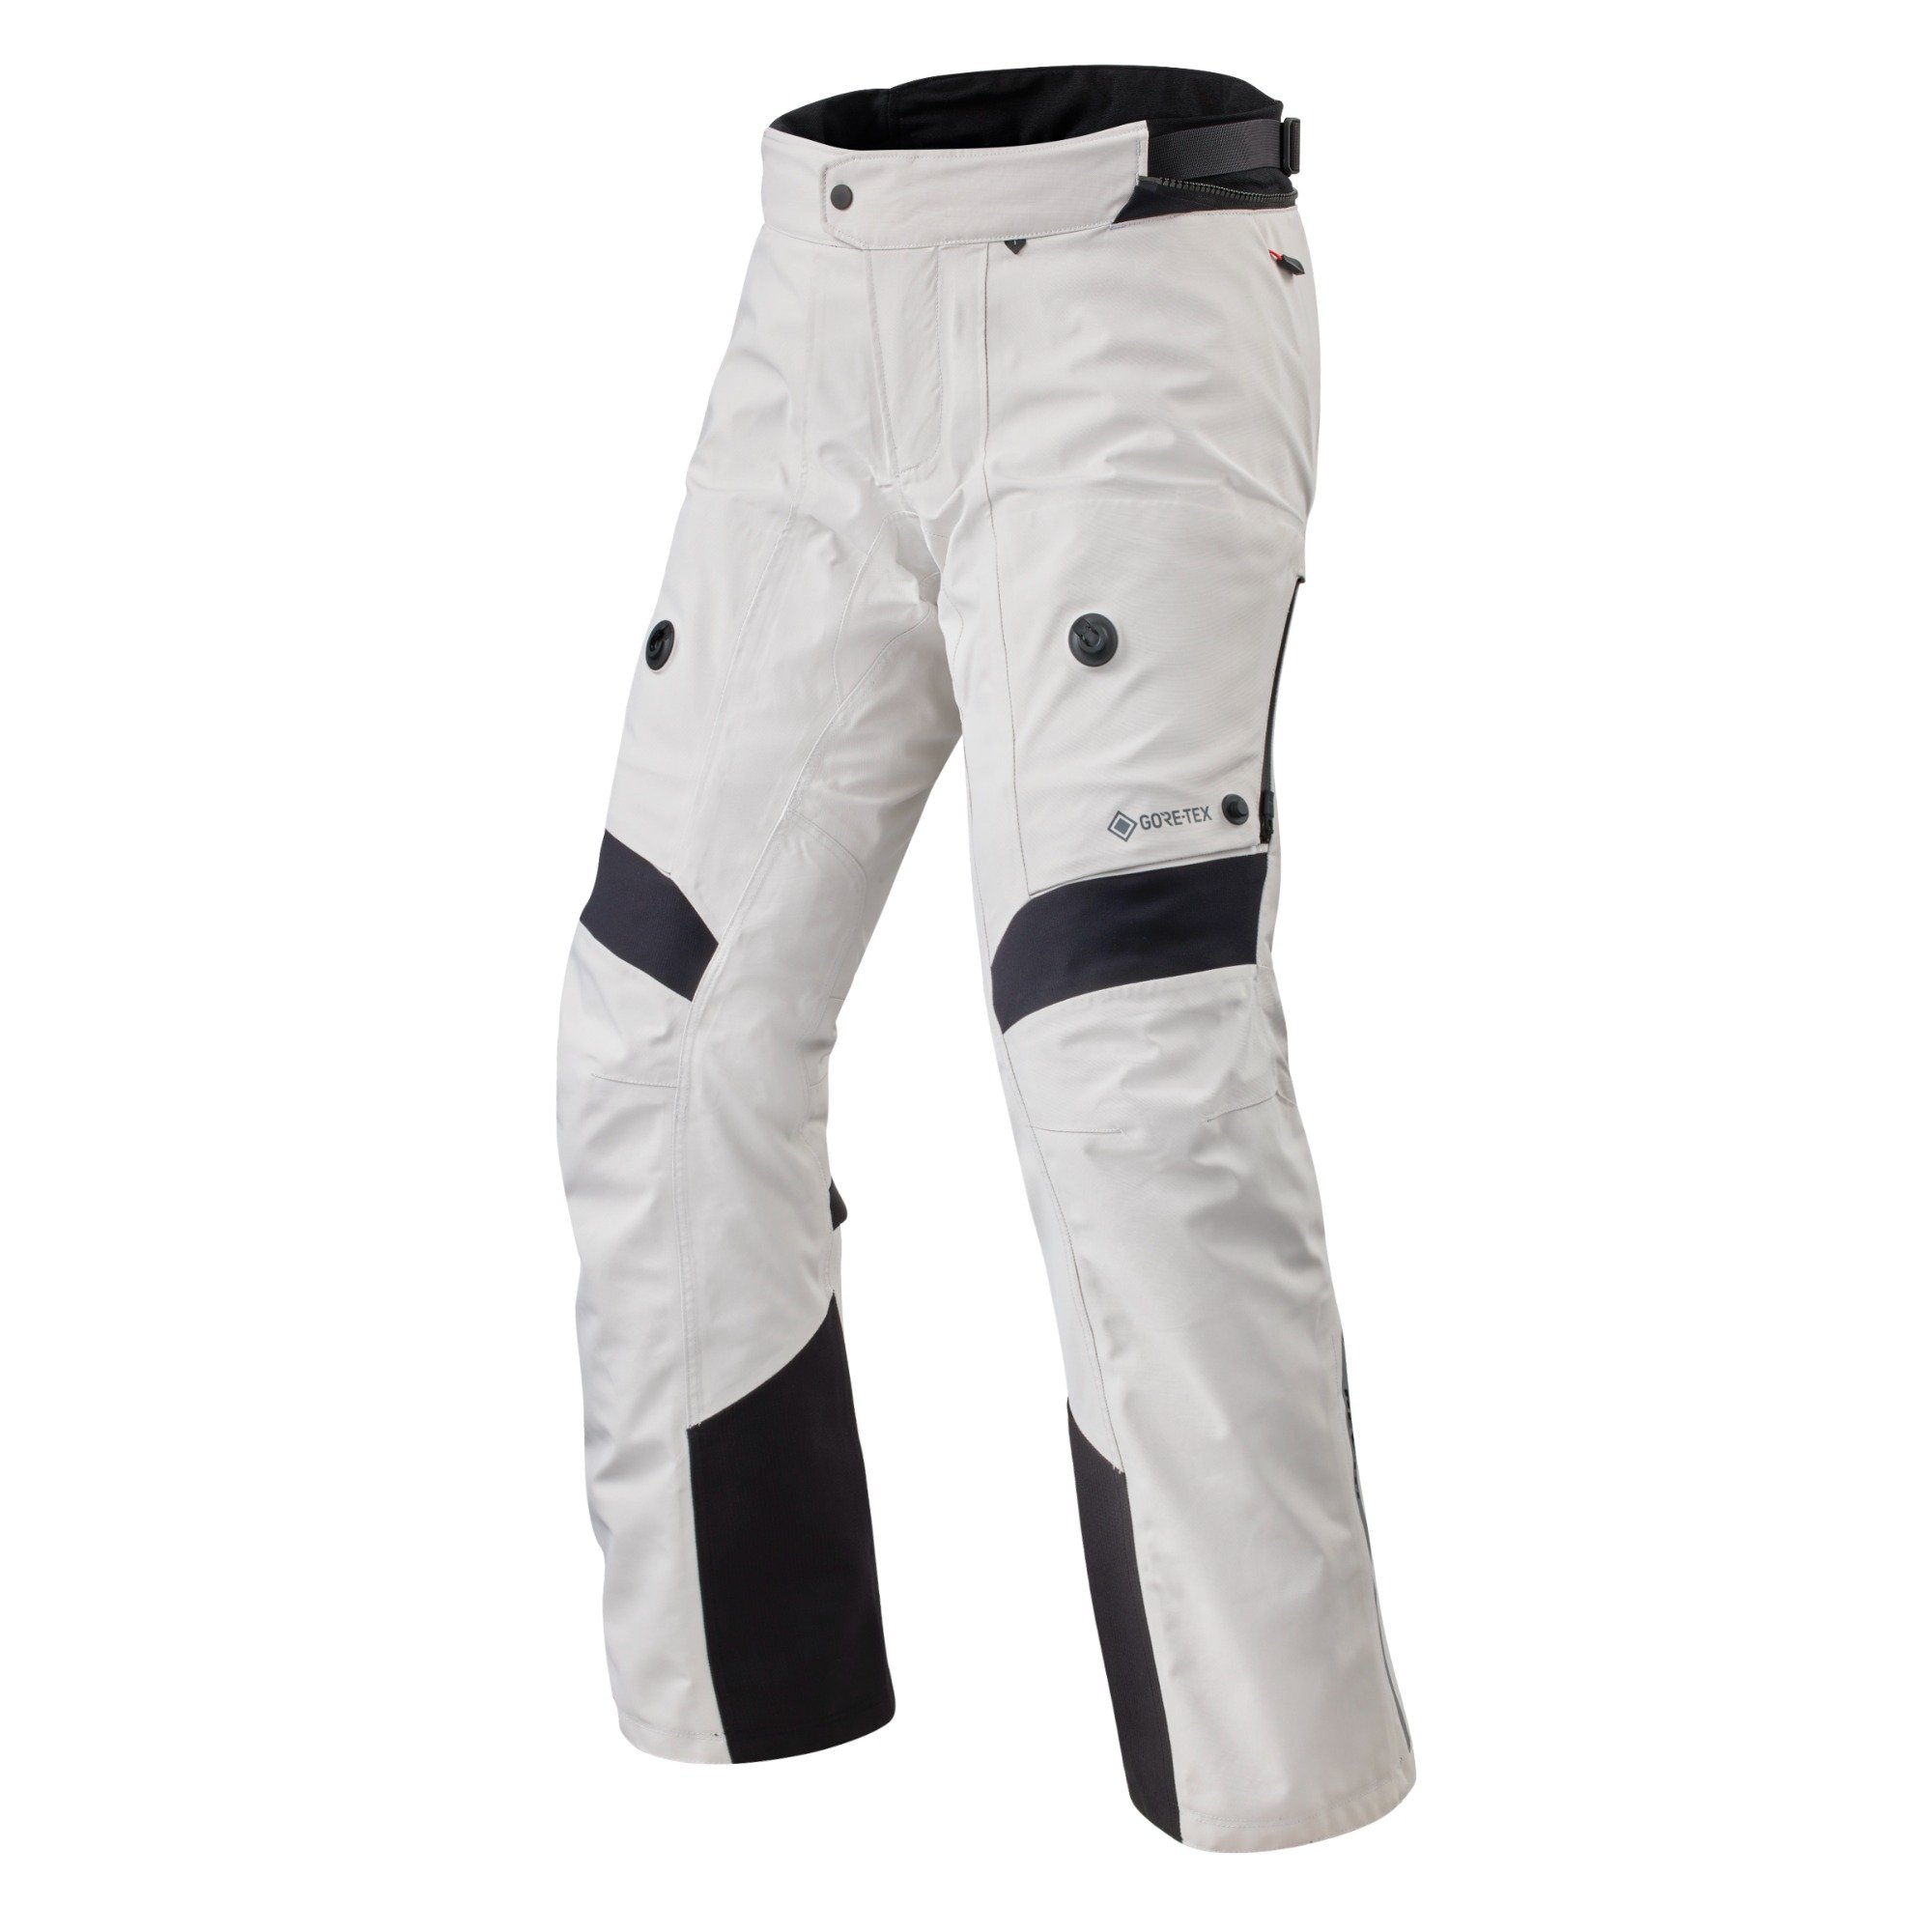 Image of REV'IT! Pants Poseidon 3 GTX Silver Black Standard Motorcycle Pants Size S EN